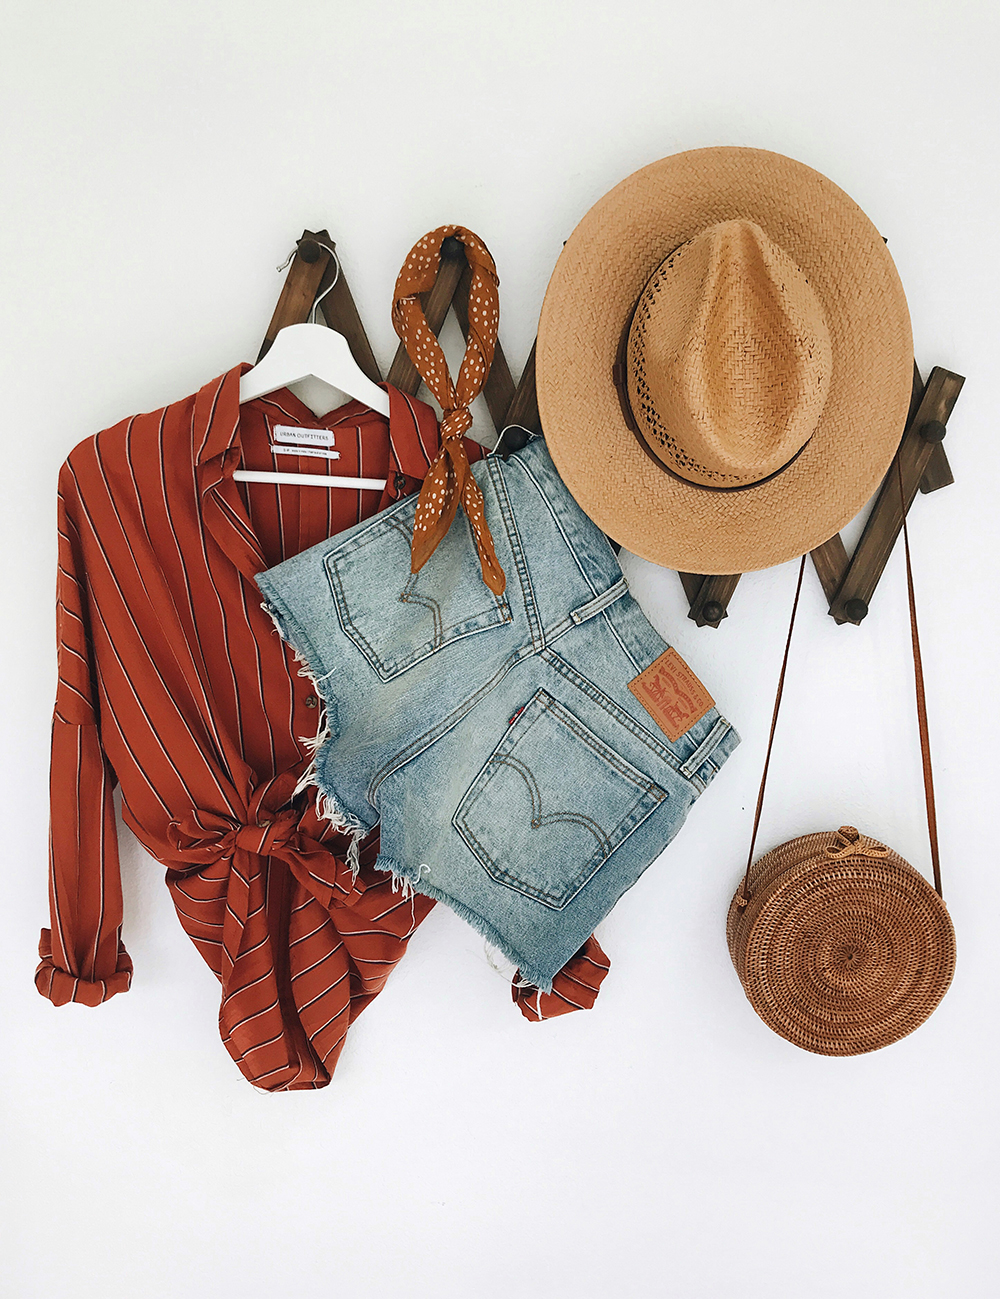 https://storage.googleapis.com/livvyland/2018/06/livvyland-blog-summer-outfit-inspiration-round-wicker-straw-handbag-levis-cutoff-shorts-striped-orange-button-up.jpg